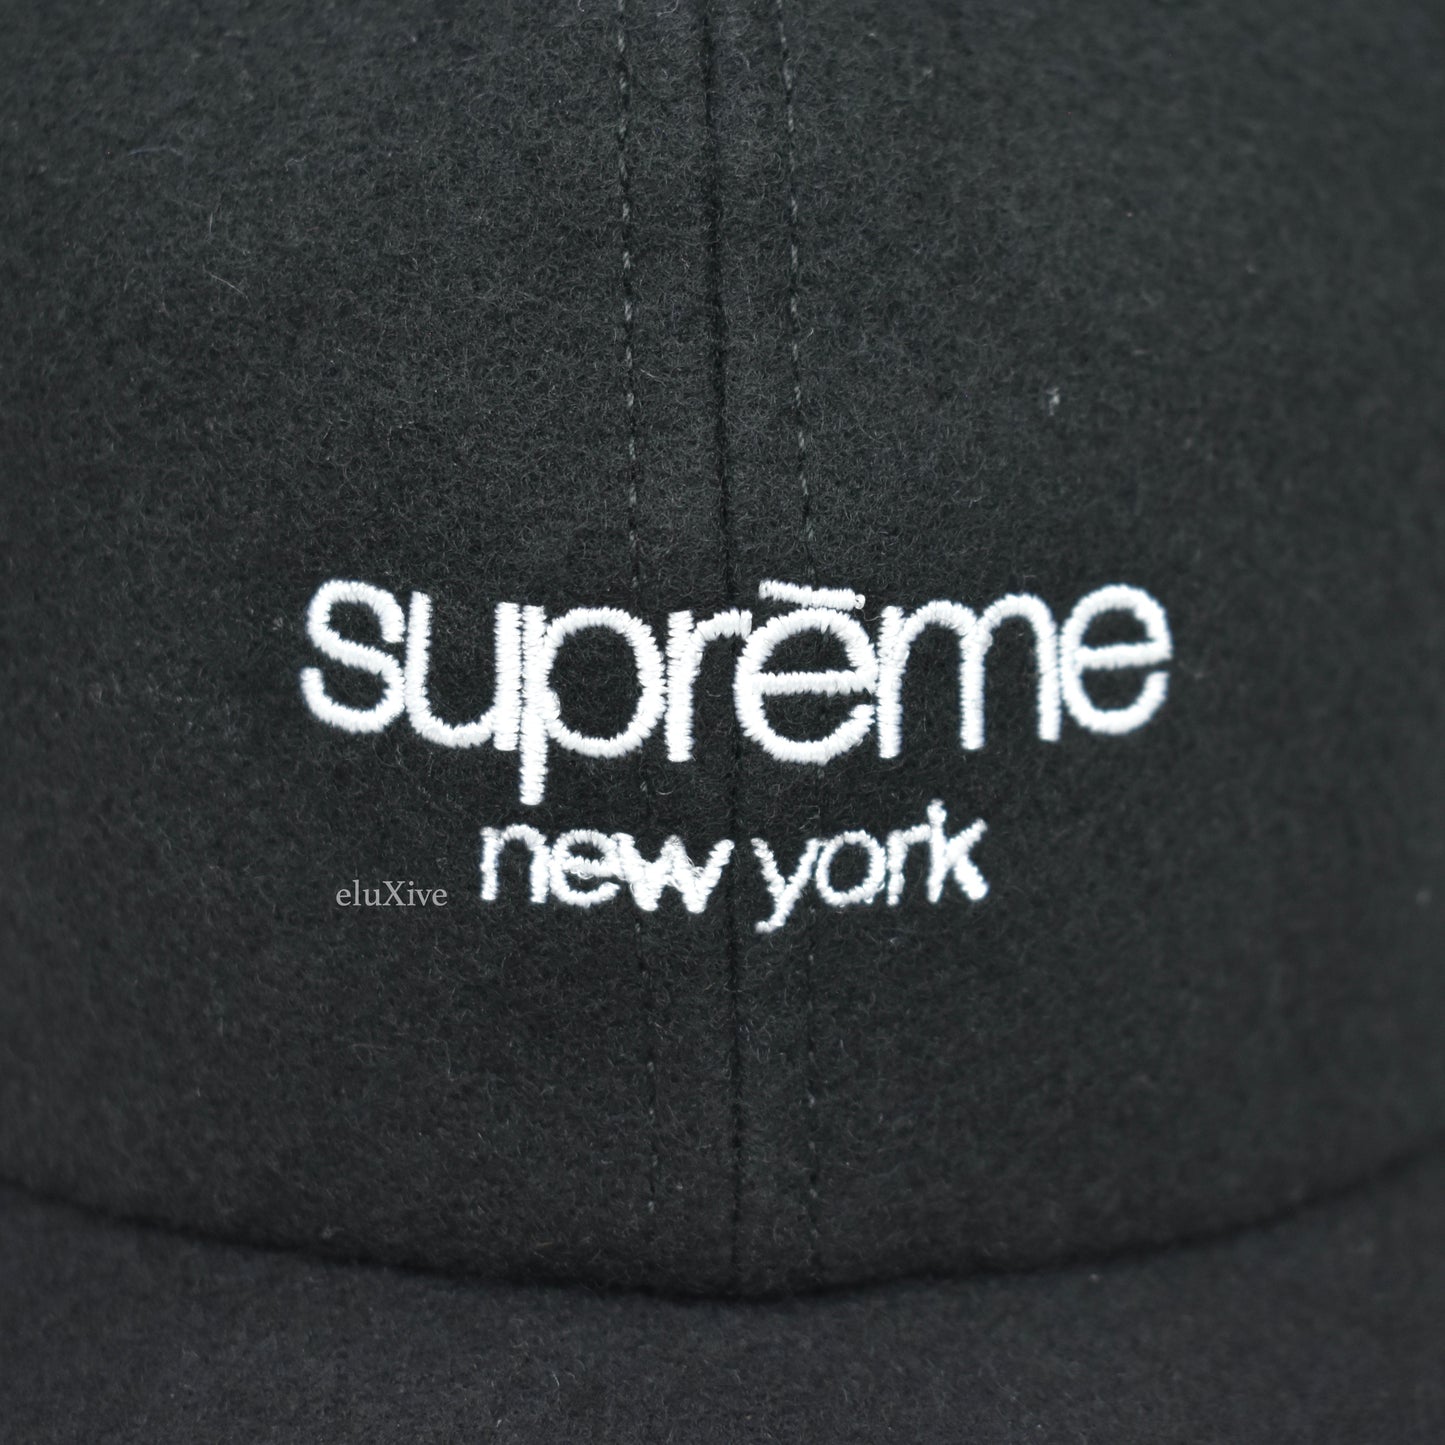 Supreme x Halley Stevensons - Black Waxed Wool Classic Logo Hat